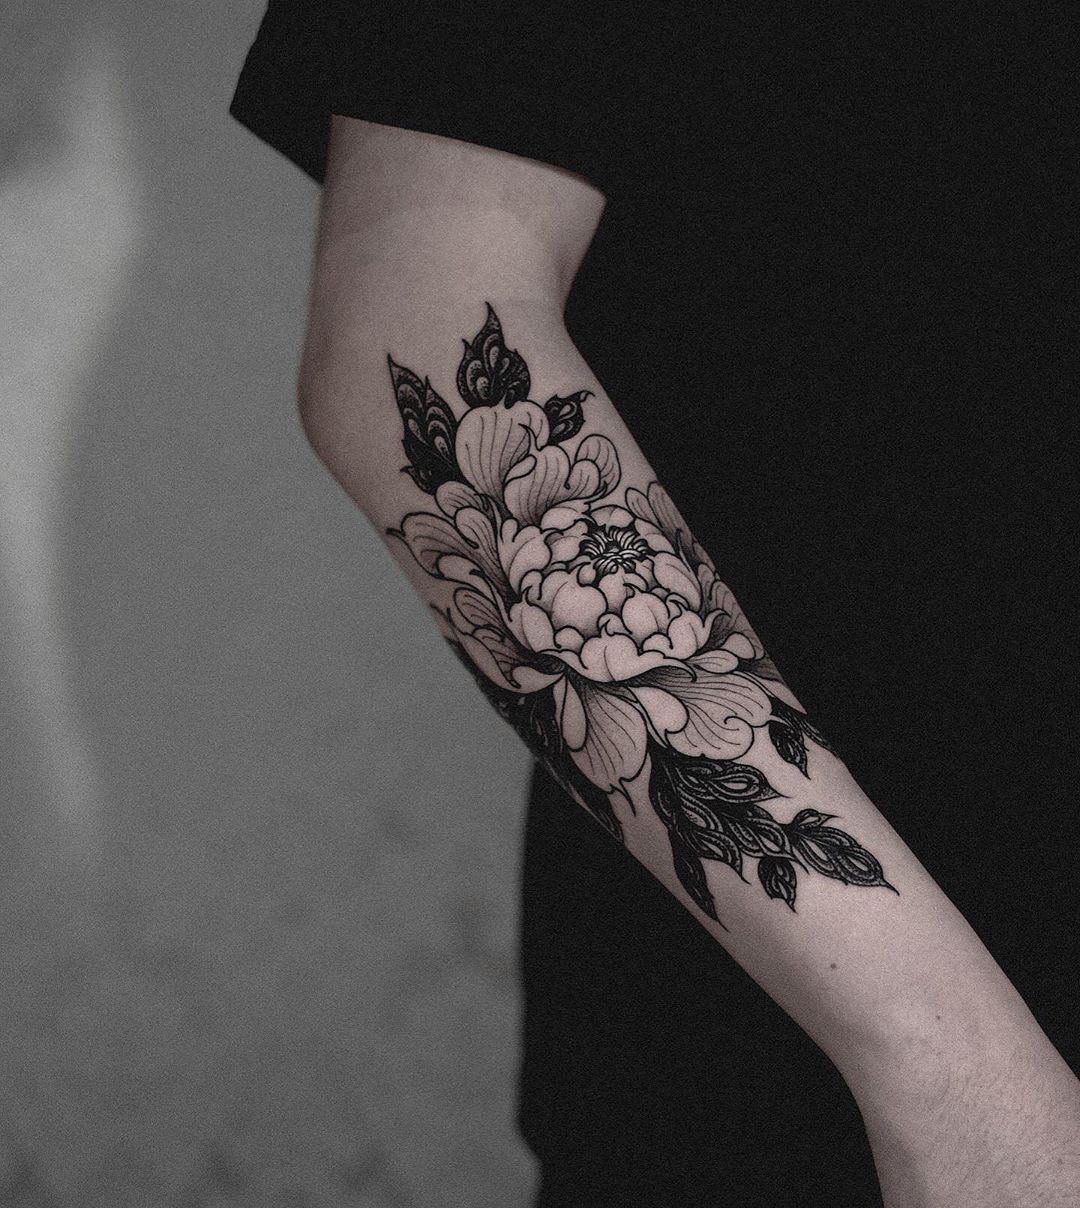 20 Perfect Peony Tattoos for a Pop of Floral Ink | CafeMom.com